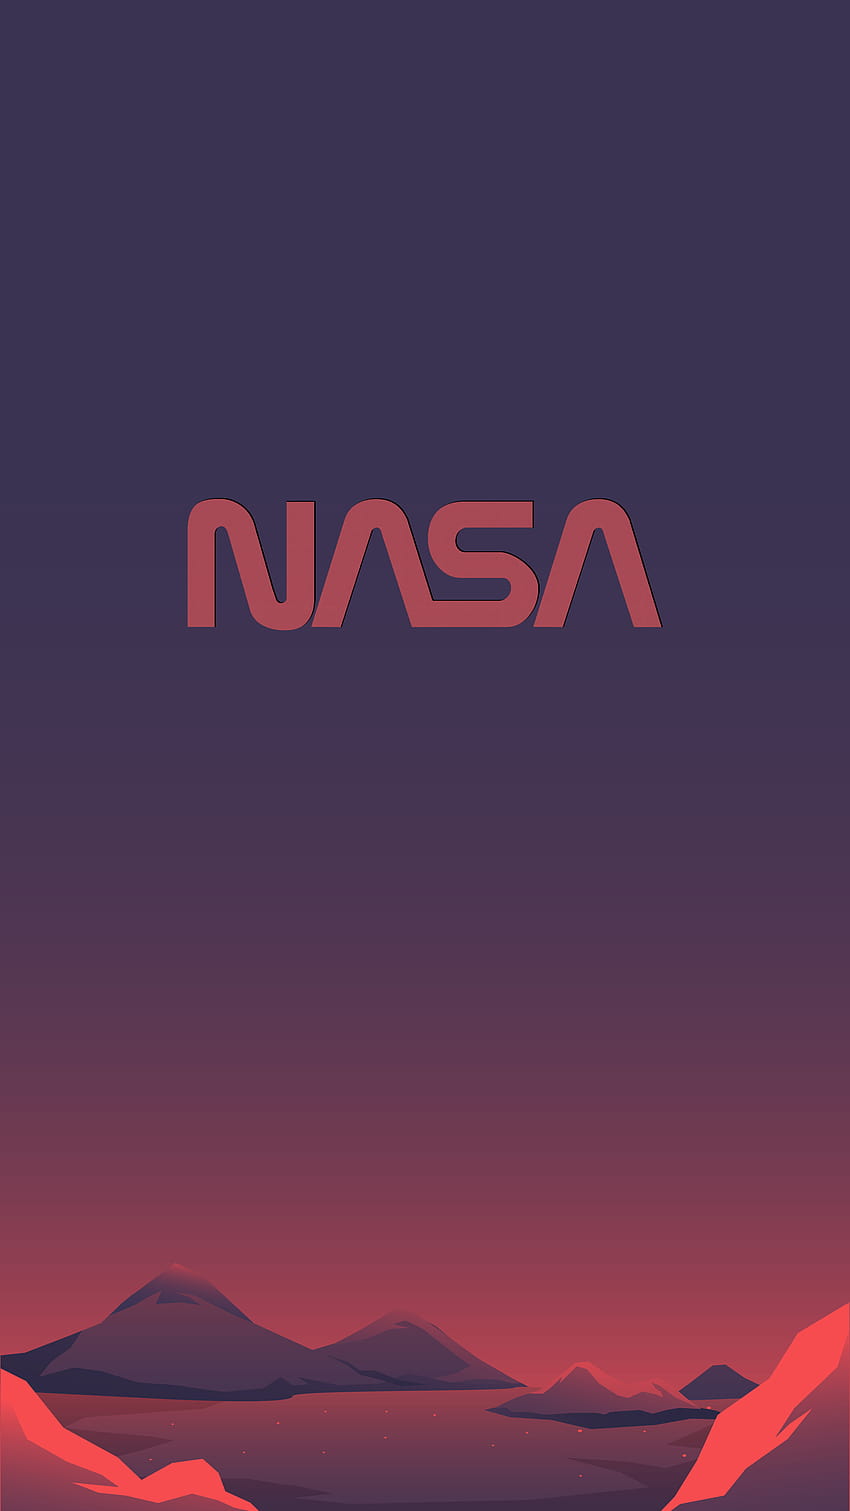 MARS NASA SPACEX FOR MOBILE PHONE HD phone wallpaper